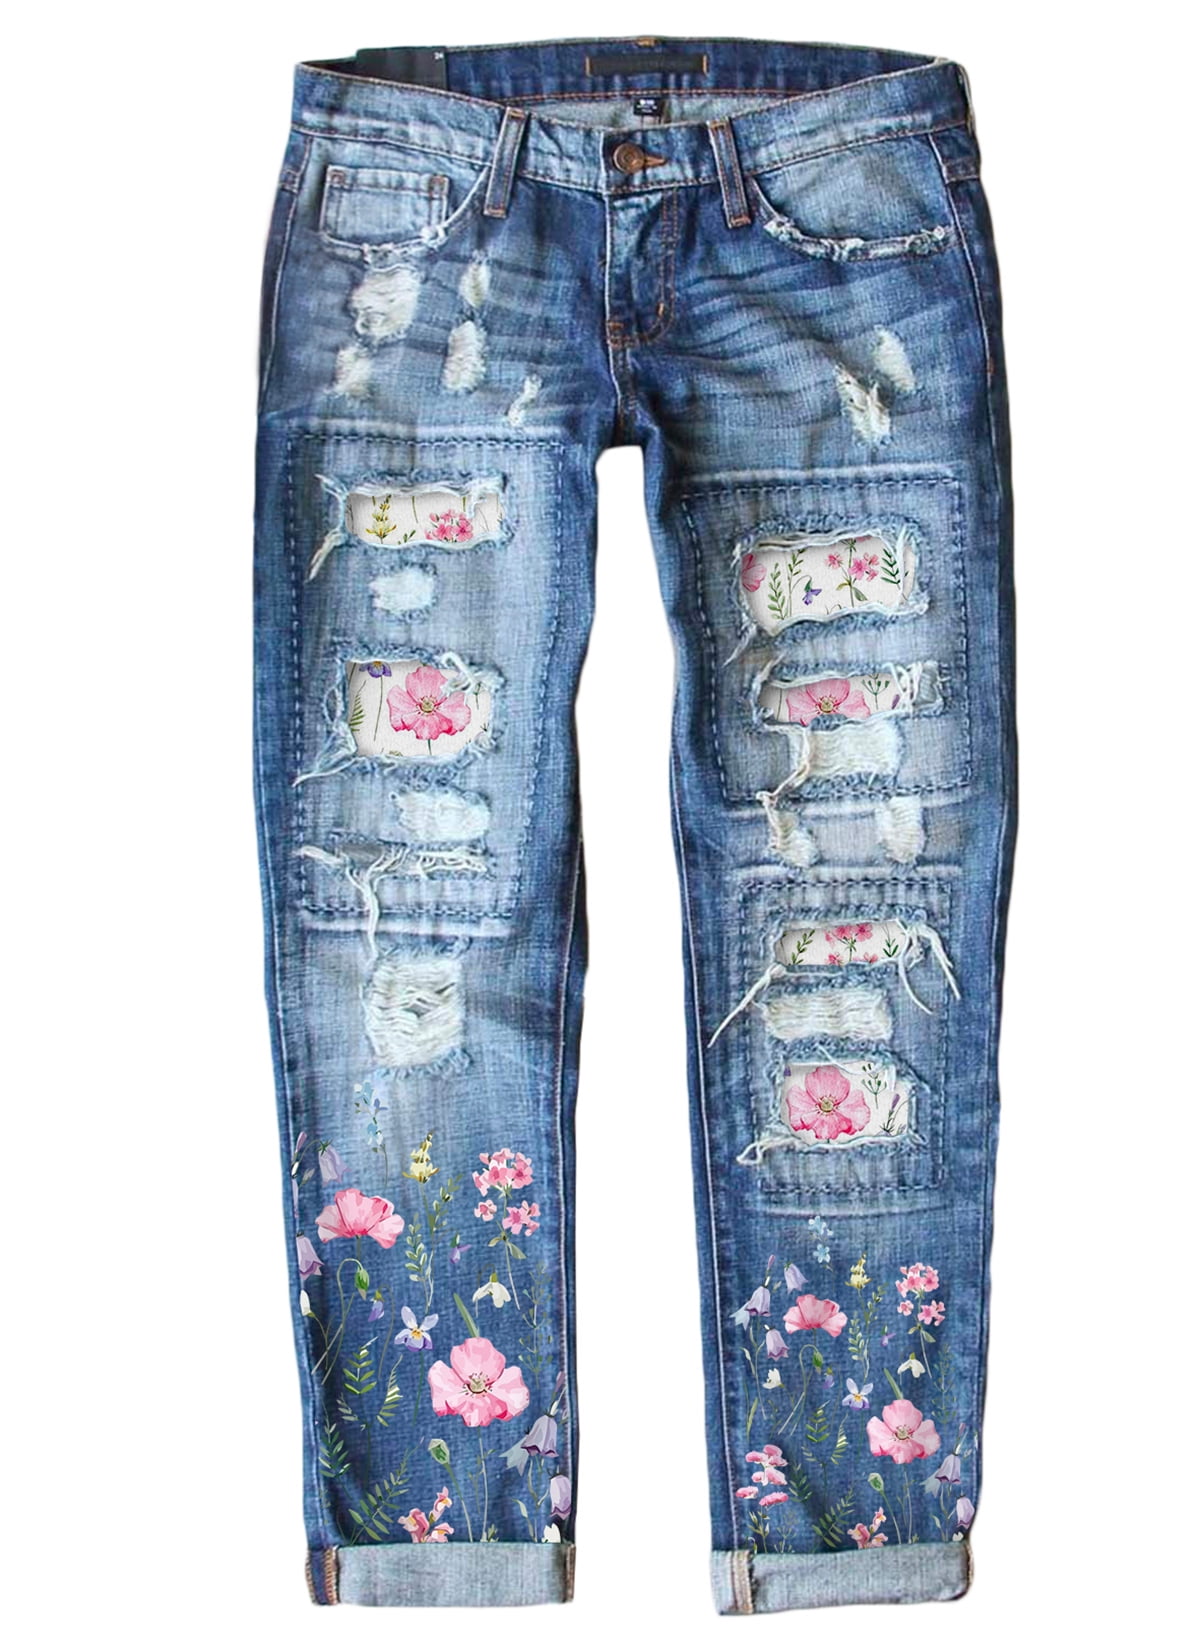 Aleumdr Skinny Jeans for Women Patch Ripped Distressed Denim Boyfriend ...